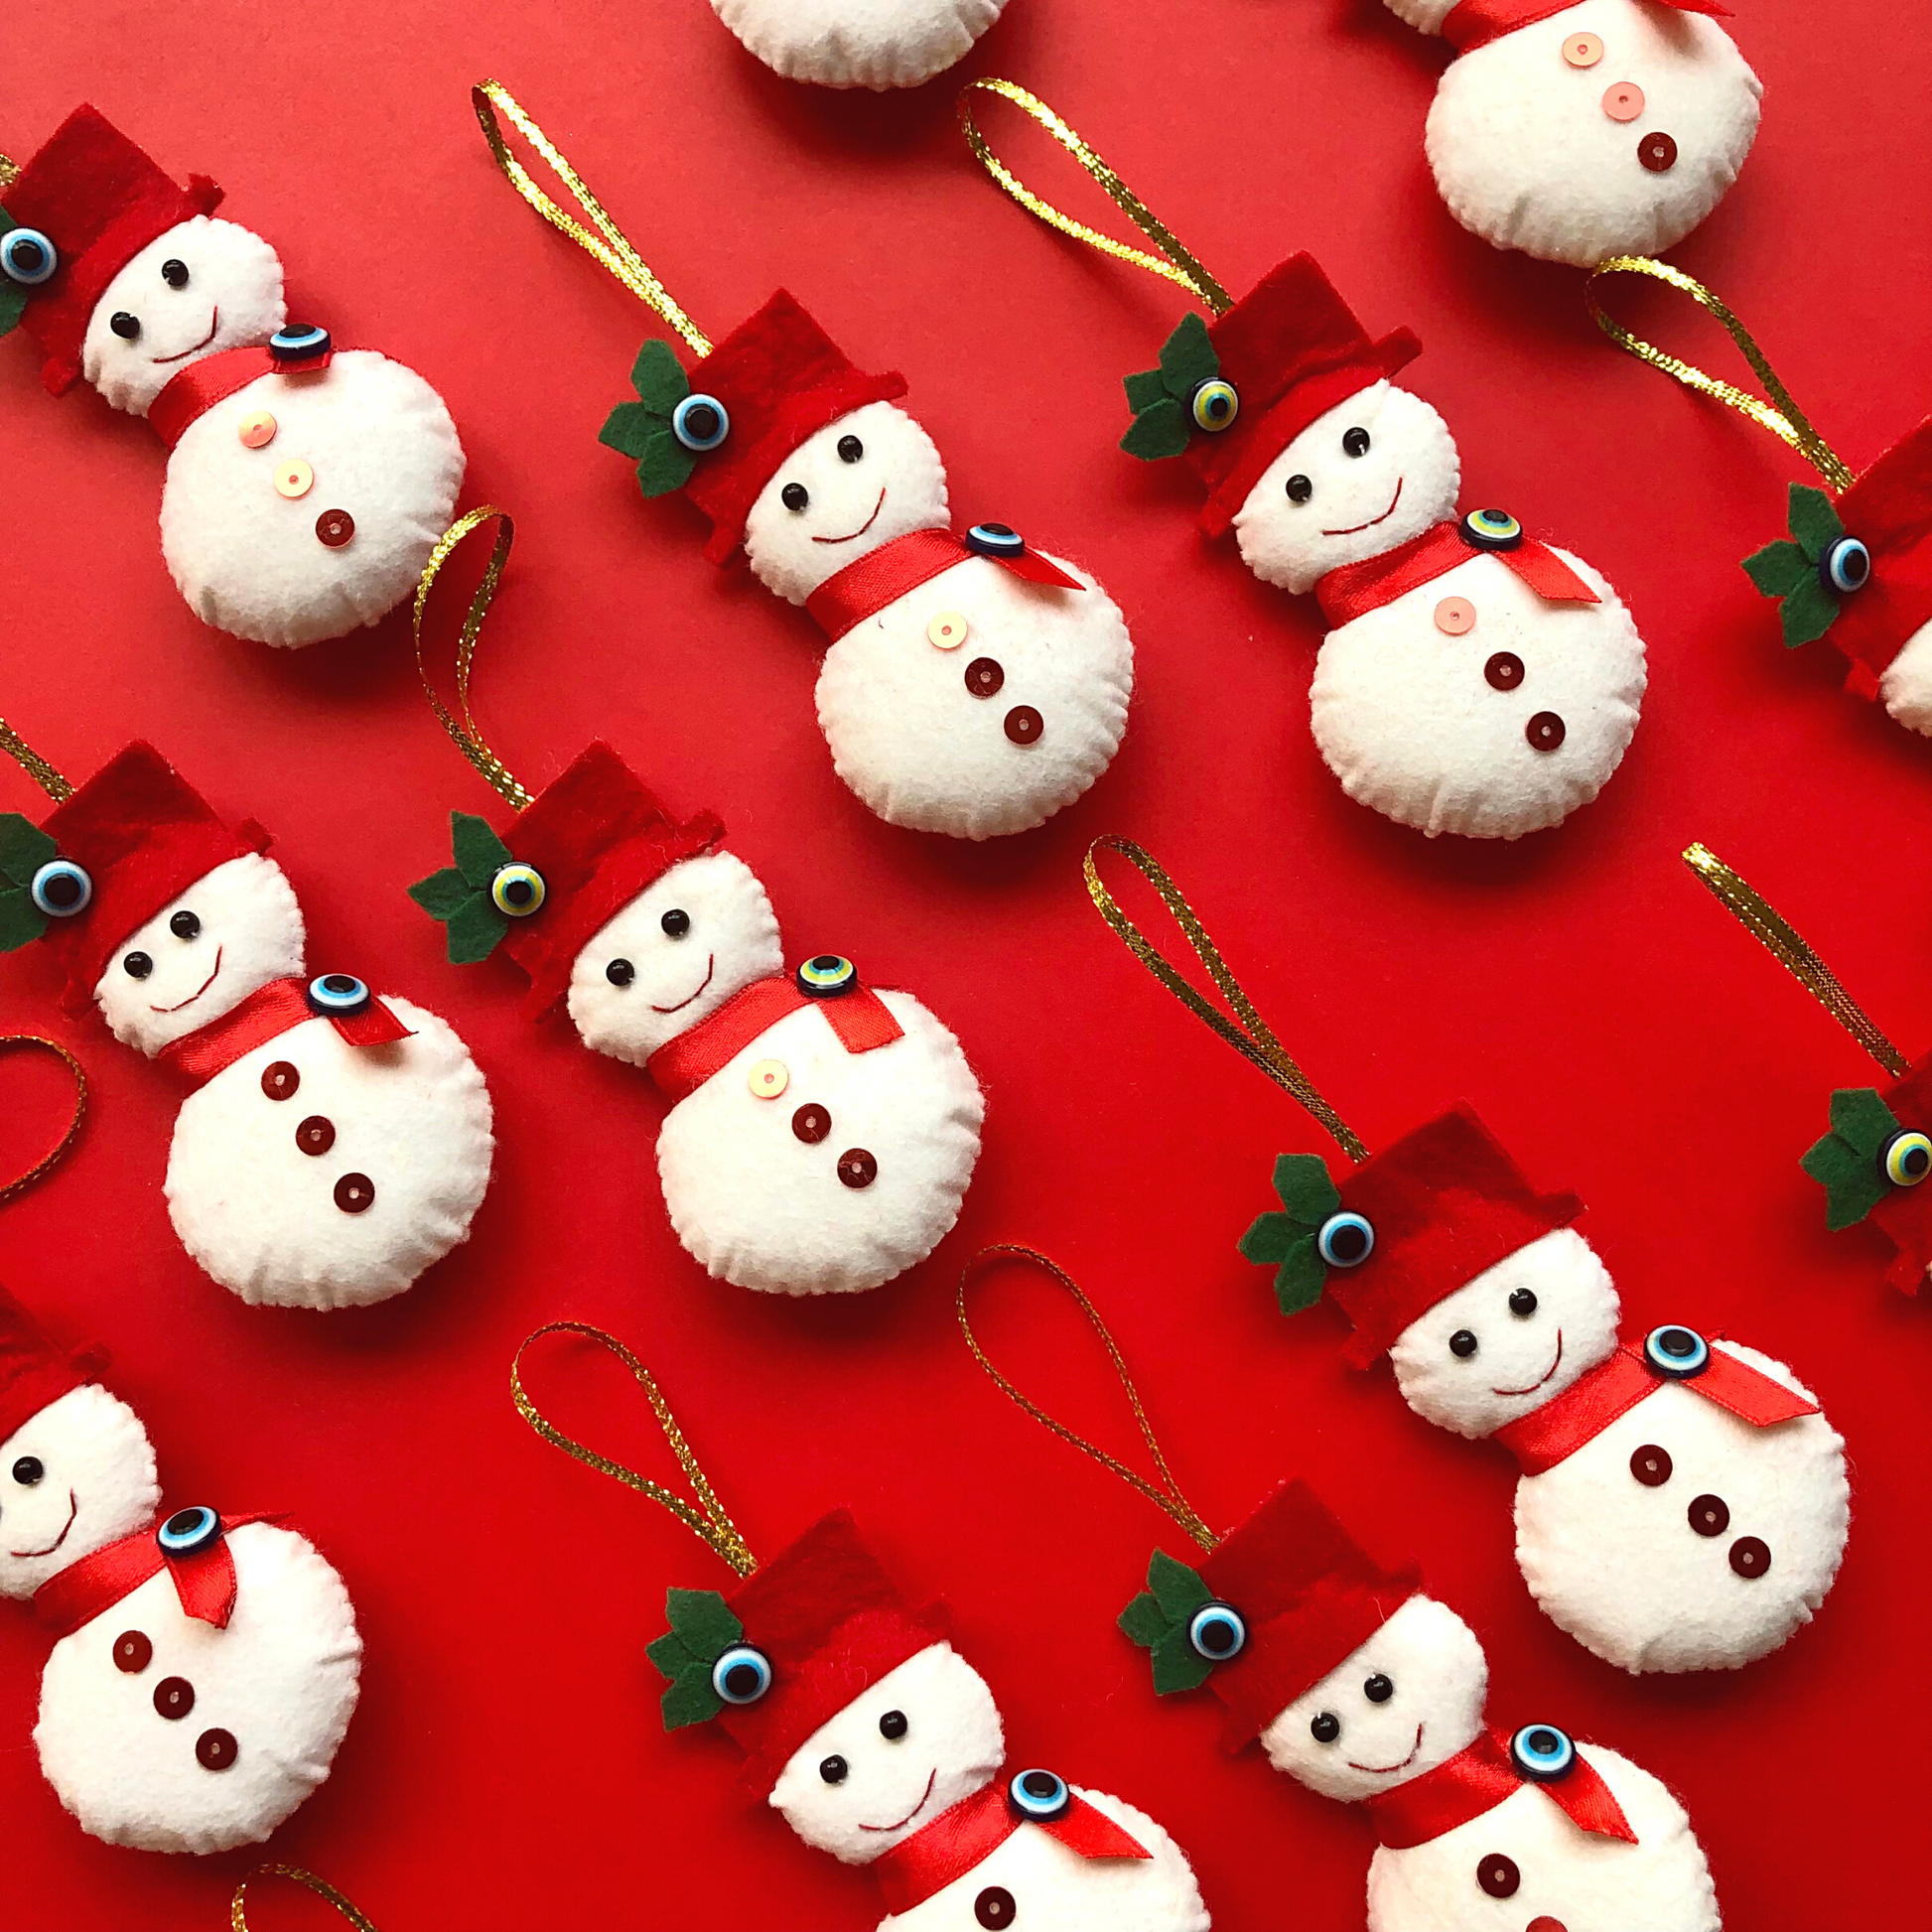 Snowman NAZAR Felt Christmas Ornaments with evil eye beads on red festive background